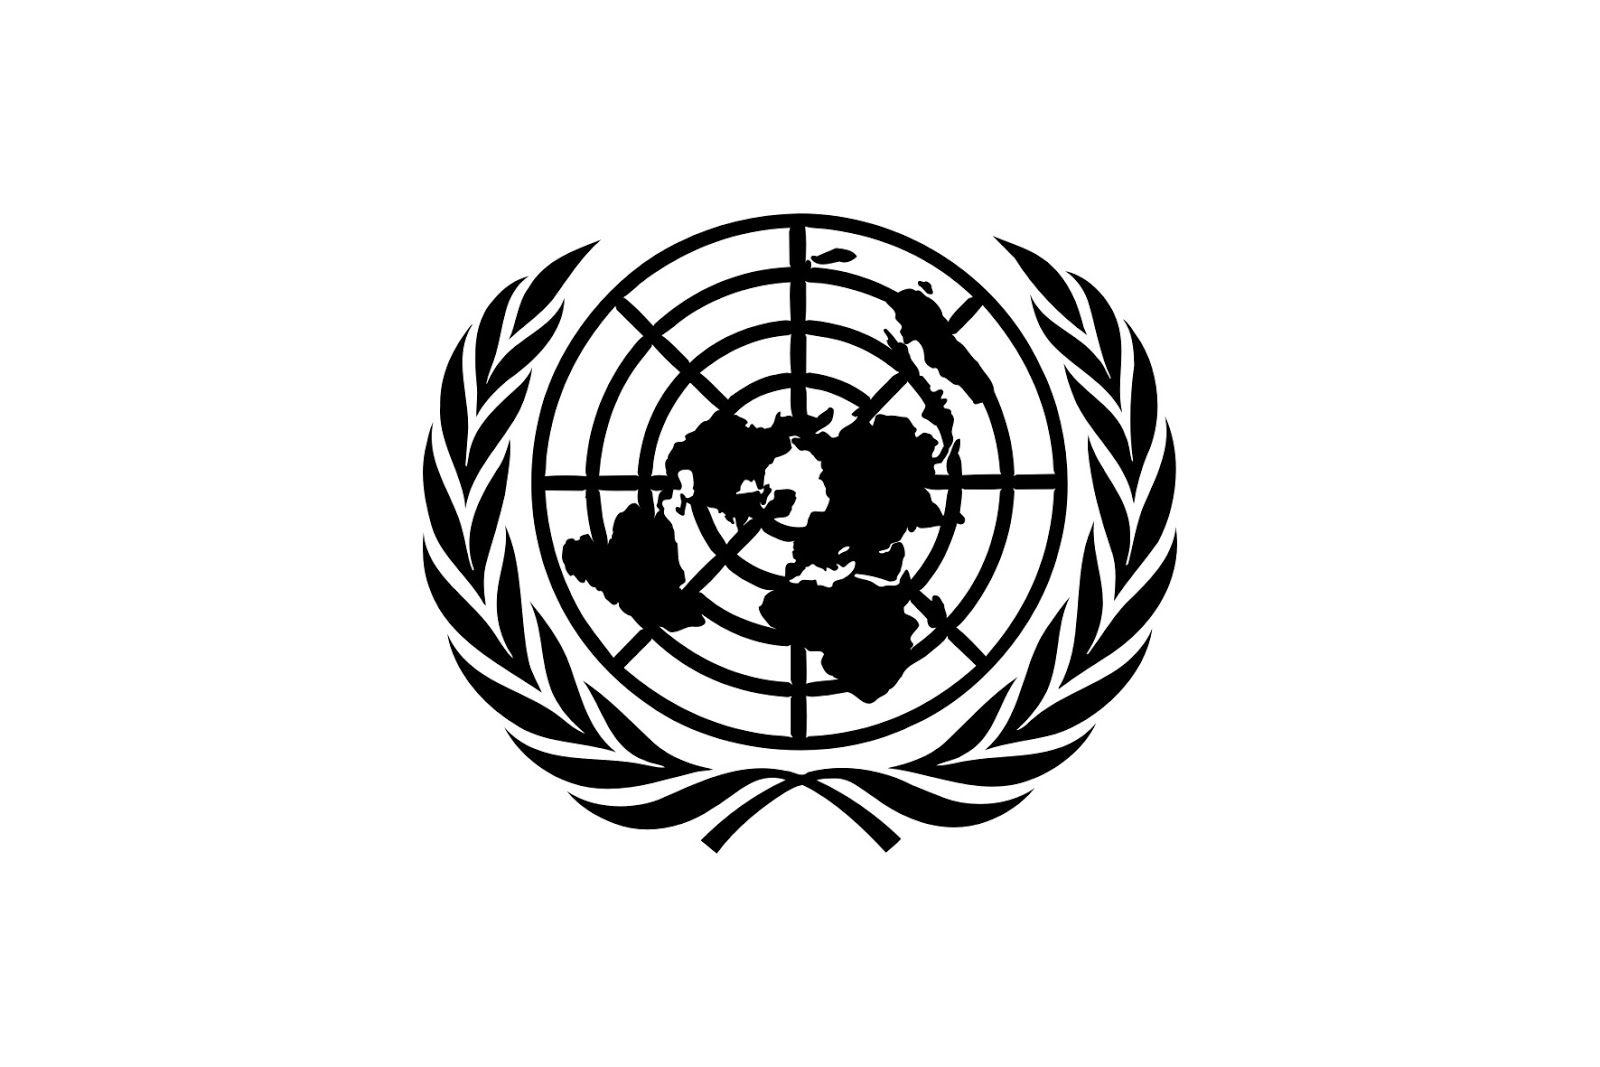 United world nation. Организация Объединённых наций ООН эмблема. Совет безопасности ООН символ. Совет безопасности ООН логотип. Генеральная Ассамблея ООН эмблема.